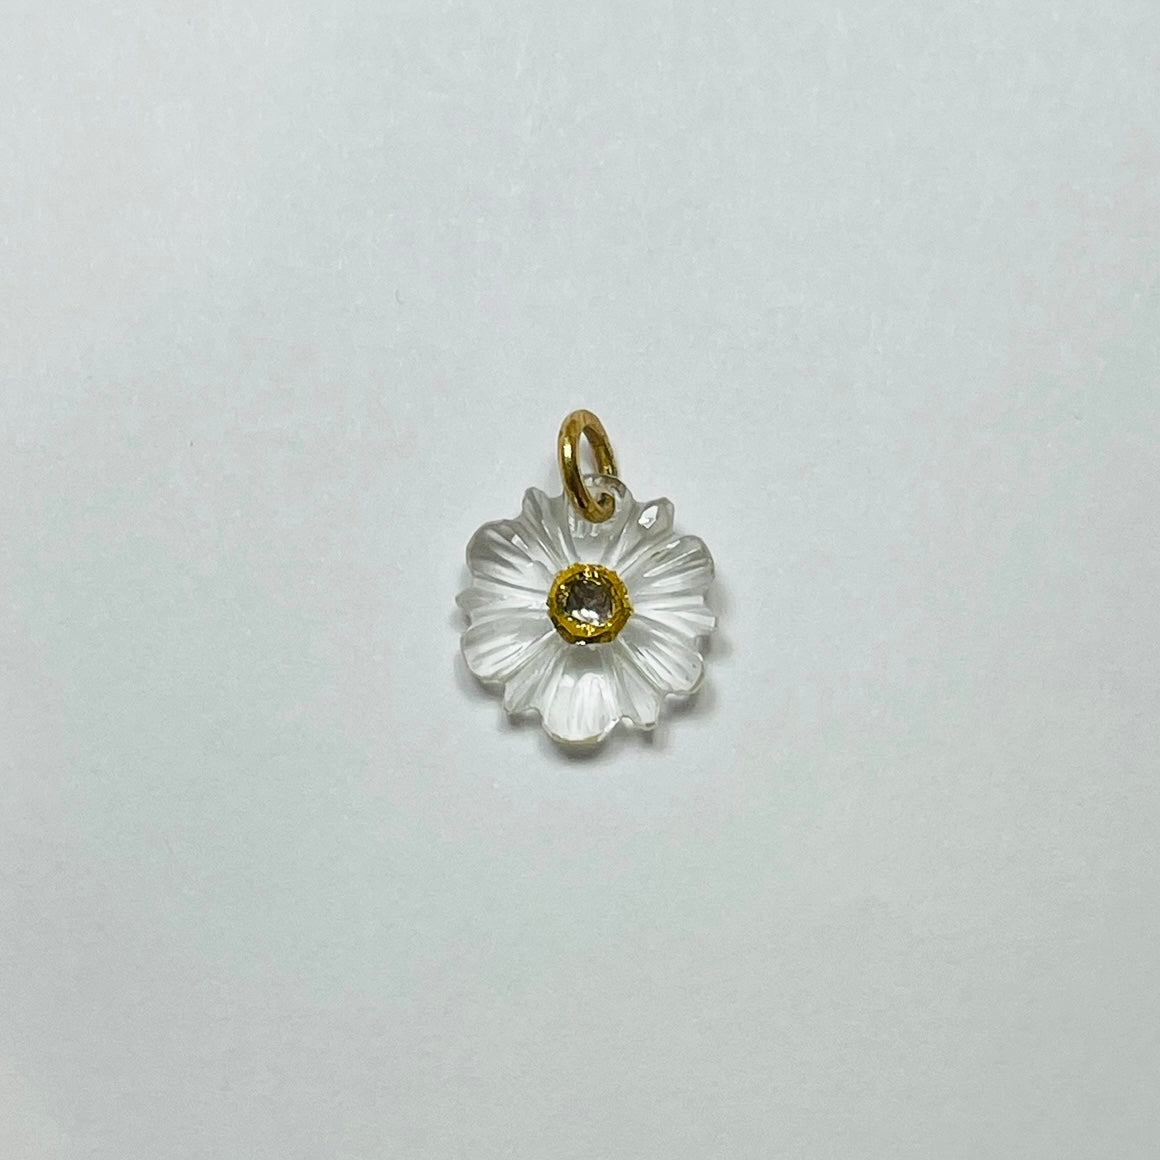 carved clear quartz flower pendant, 5/8 in